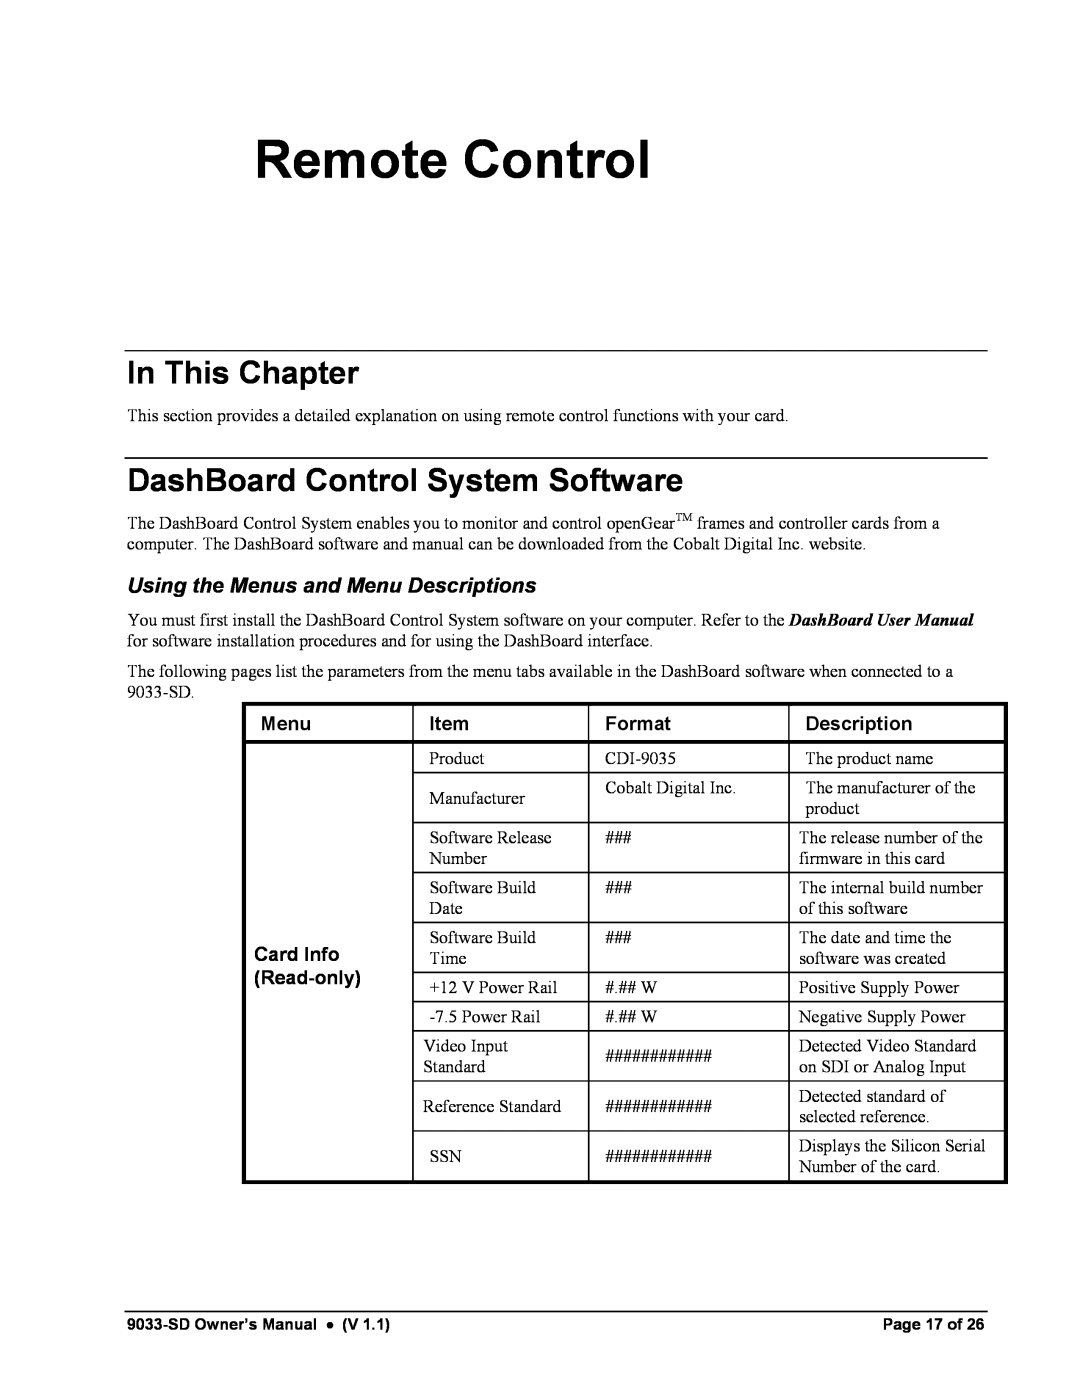 Cobalt Networks 9033-SD Remote Control, DashBoard Control System Software, Using the Menus and Menu Descriptions 